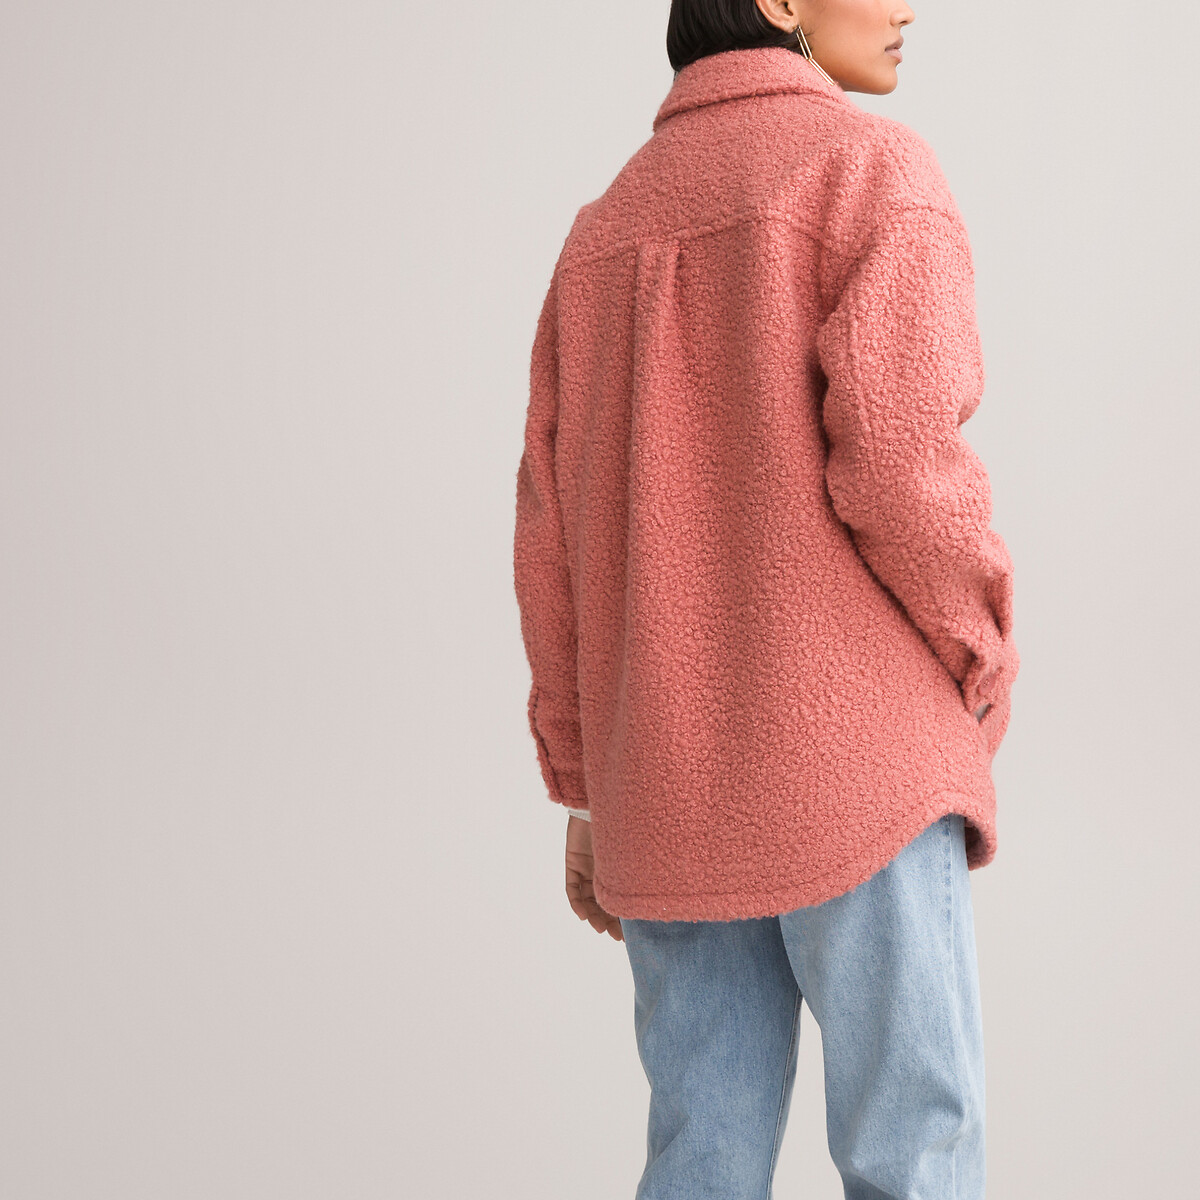 Куртка LaRedoute Легкая под мутон 34 (FR) - 40 (RUS) розовый, размер 34 (FR) - 40 (RUS) Легкая под мутон 34 (FR) - 40 (RUS) розовый - фото 4